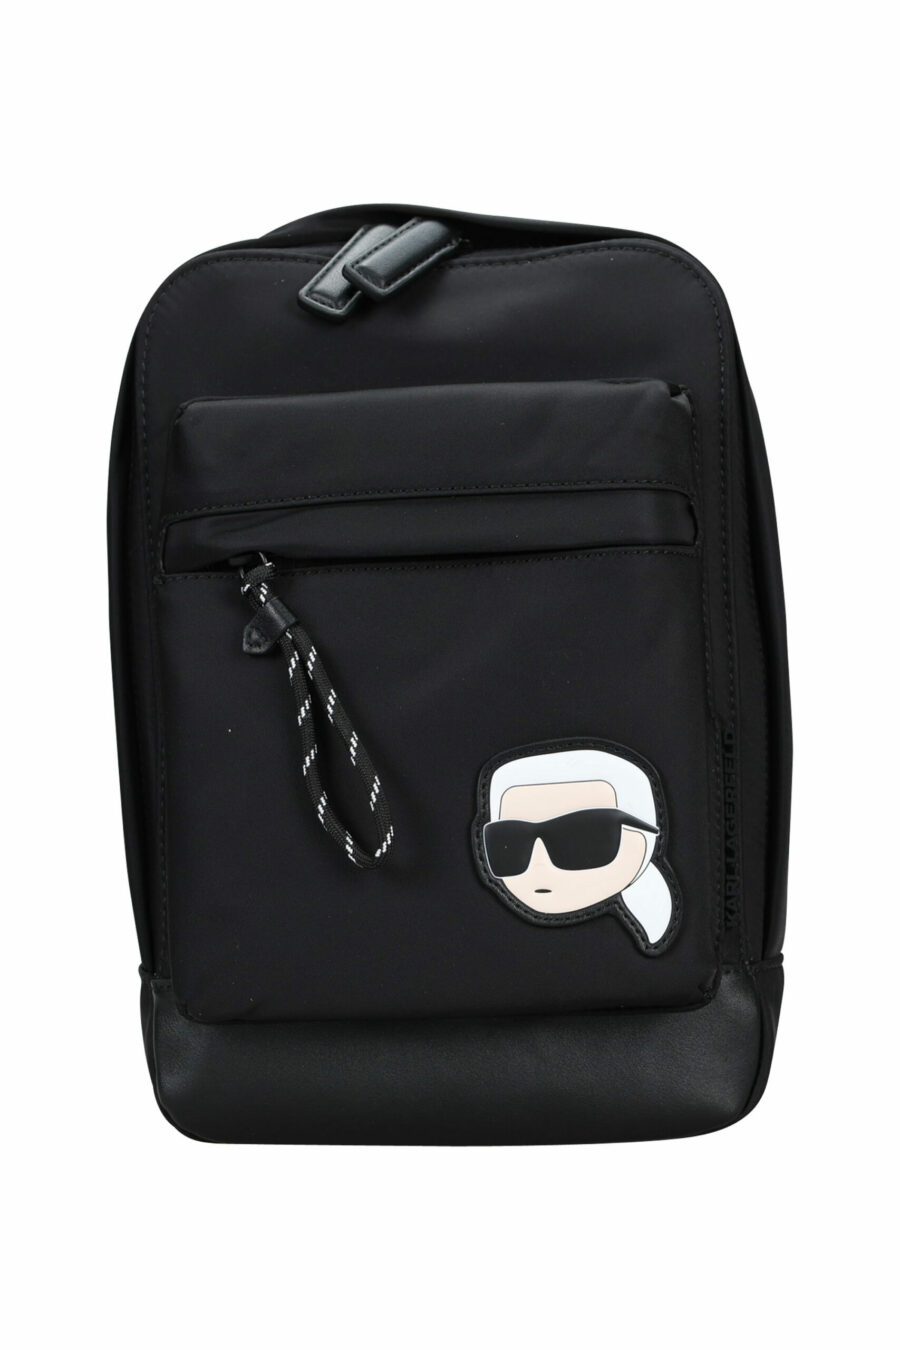 Schwarze Crossbody-Tasche mit Mini-Logo "kar" - 8720744411048 skaliert